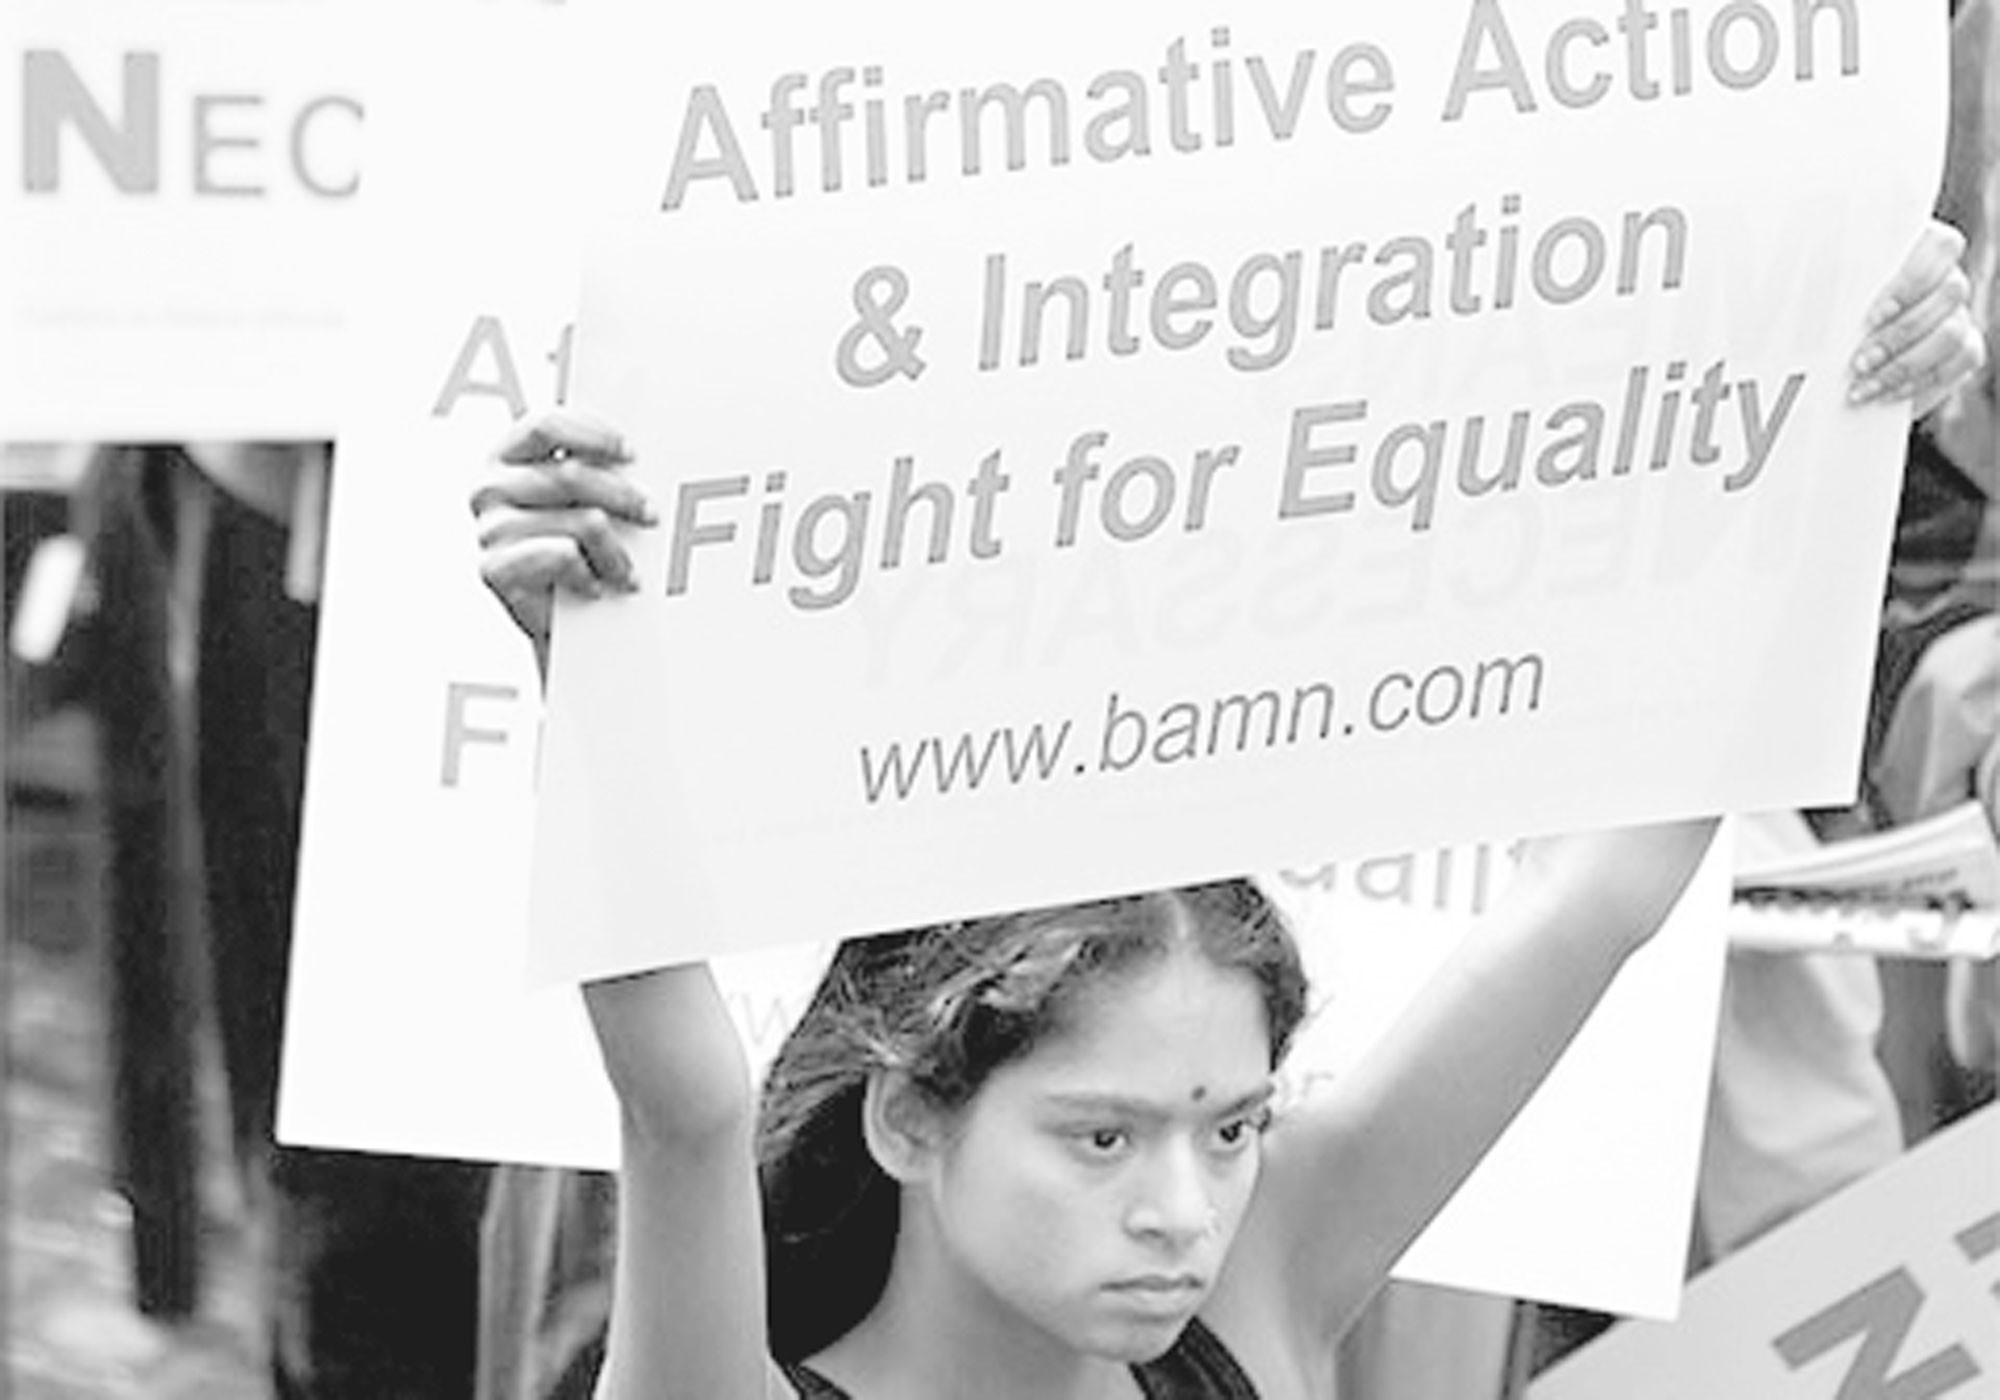 Affirmative action persuasive essay outline